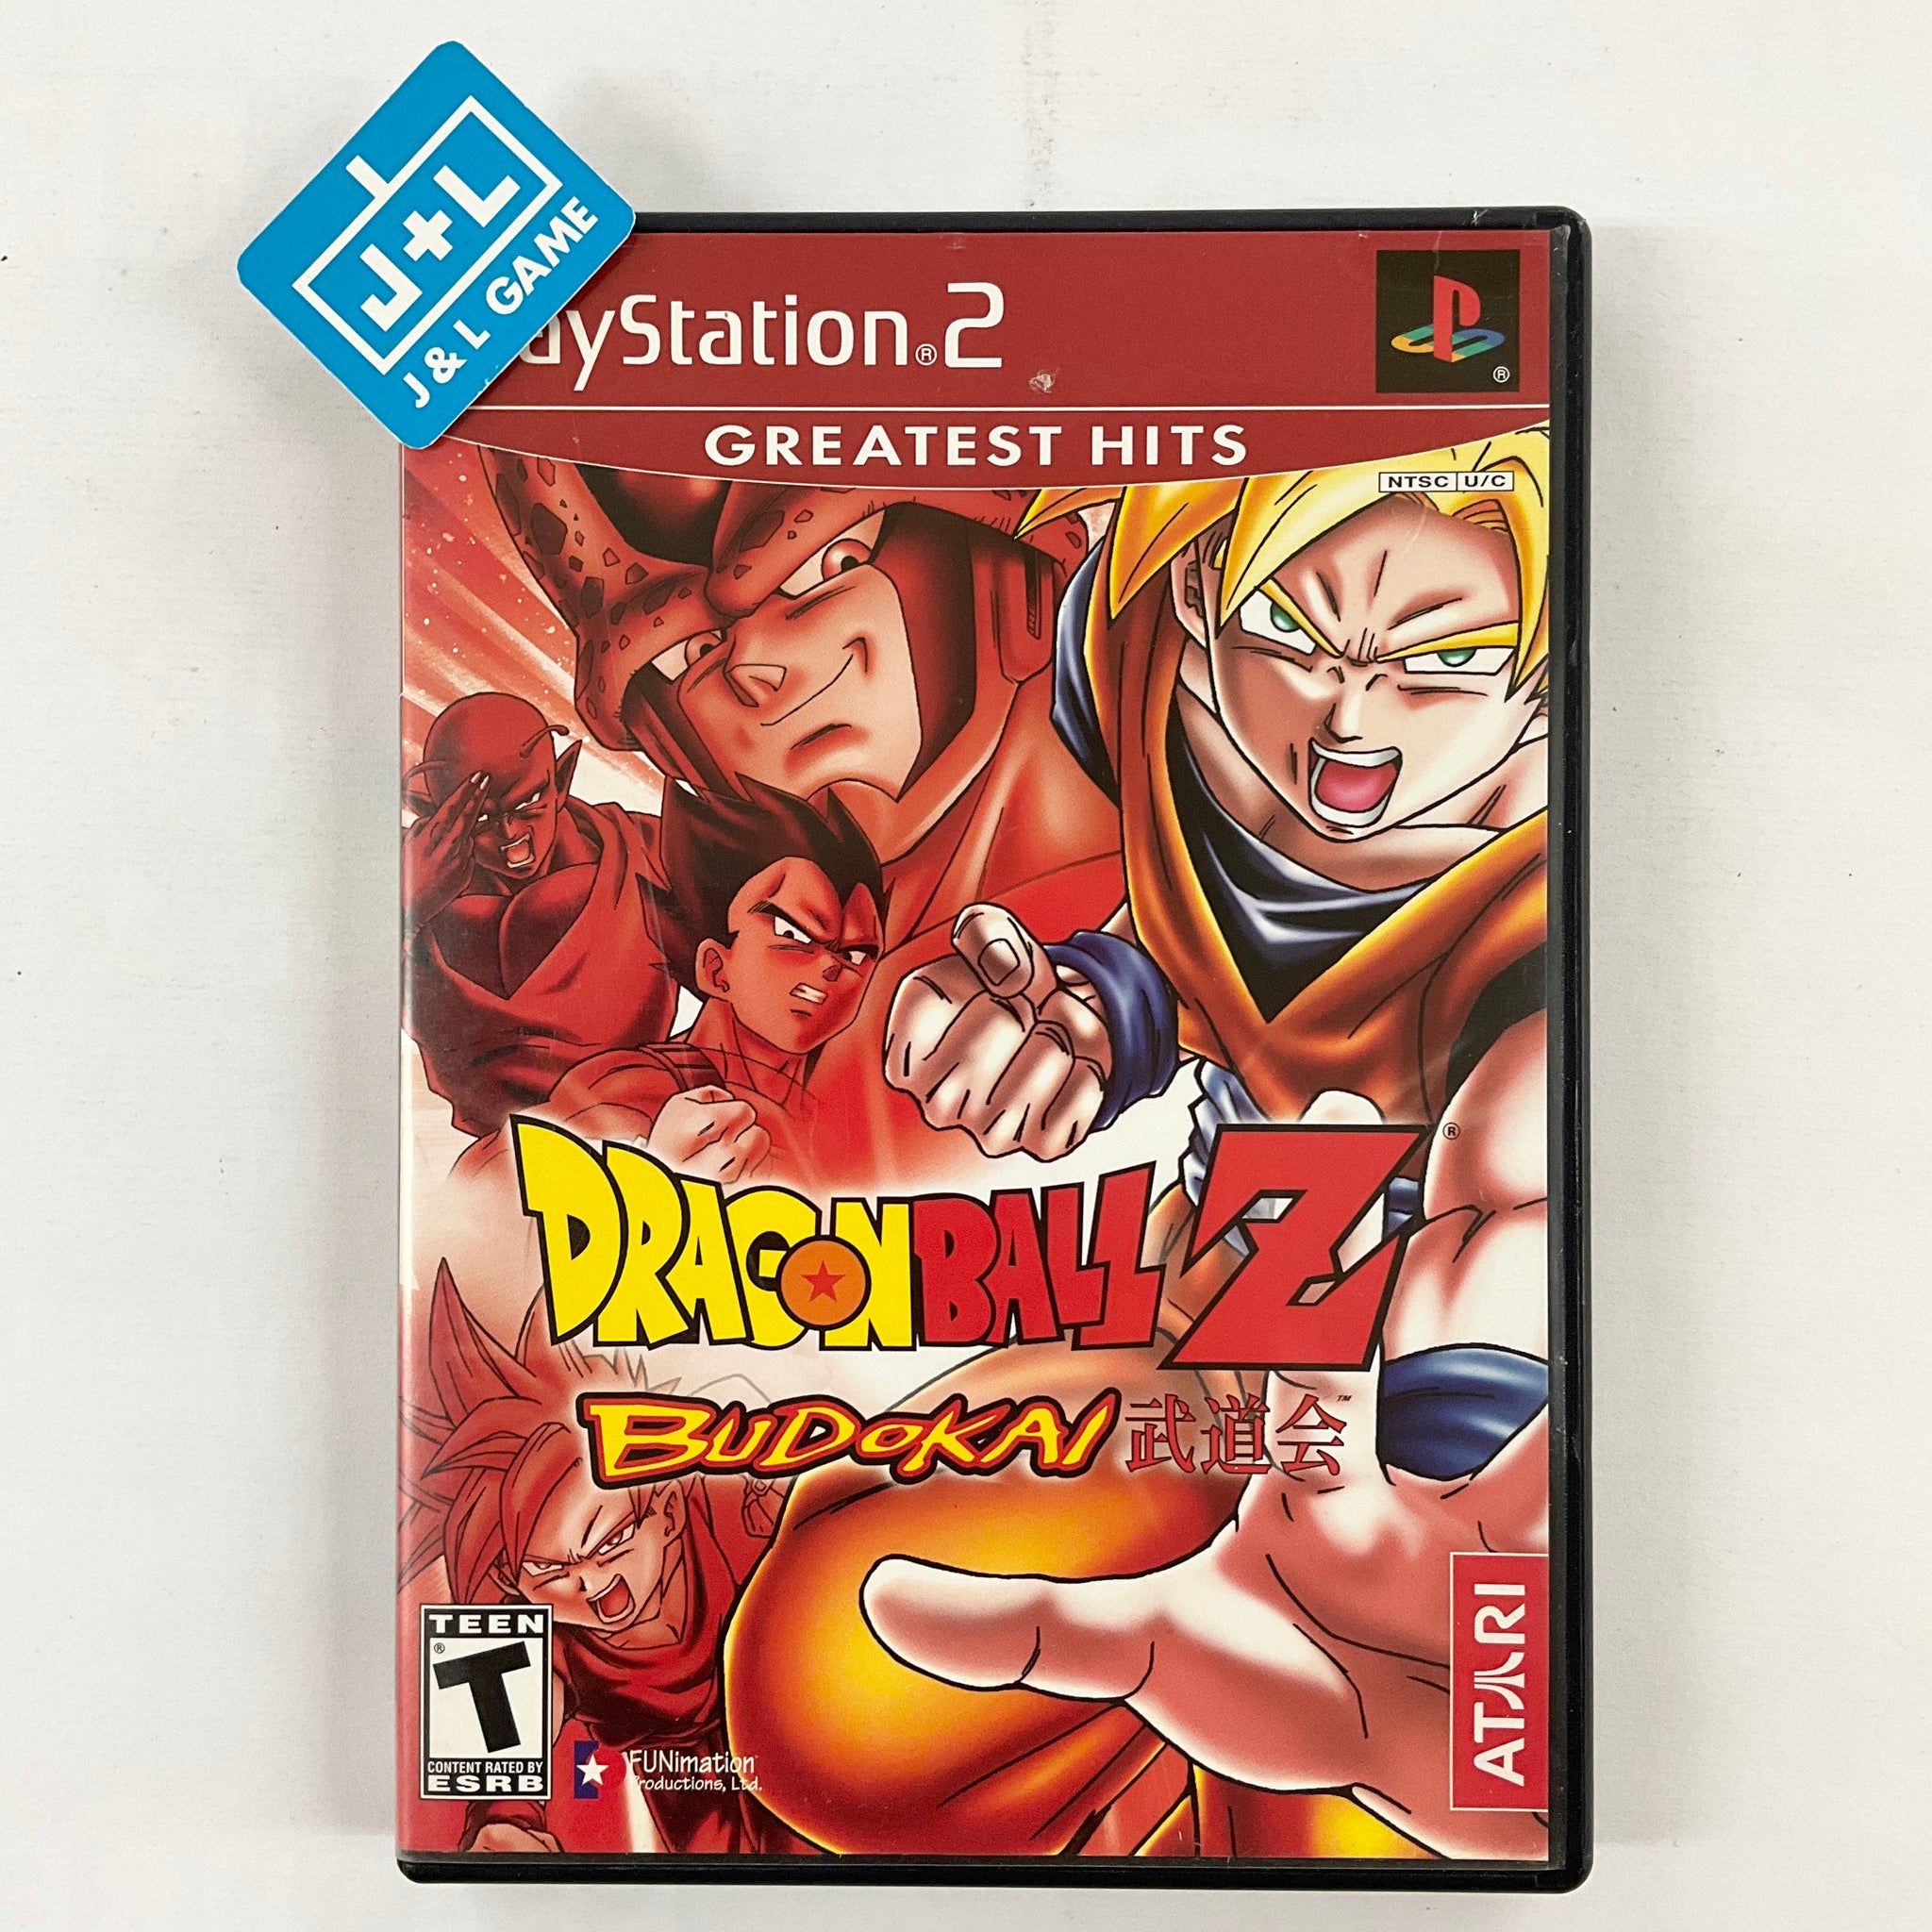 Dragon Ball Z: Budokai Tenkaichi 3 - (PS2) Playstation 2 [Pre-Owned]